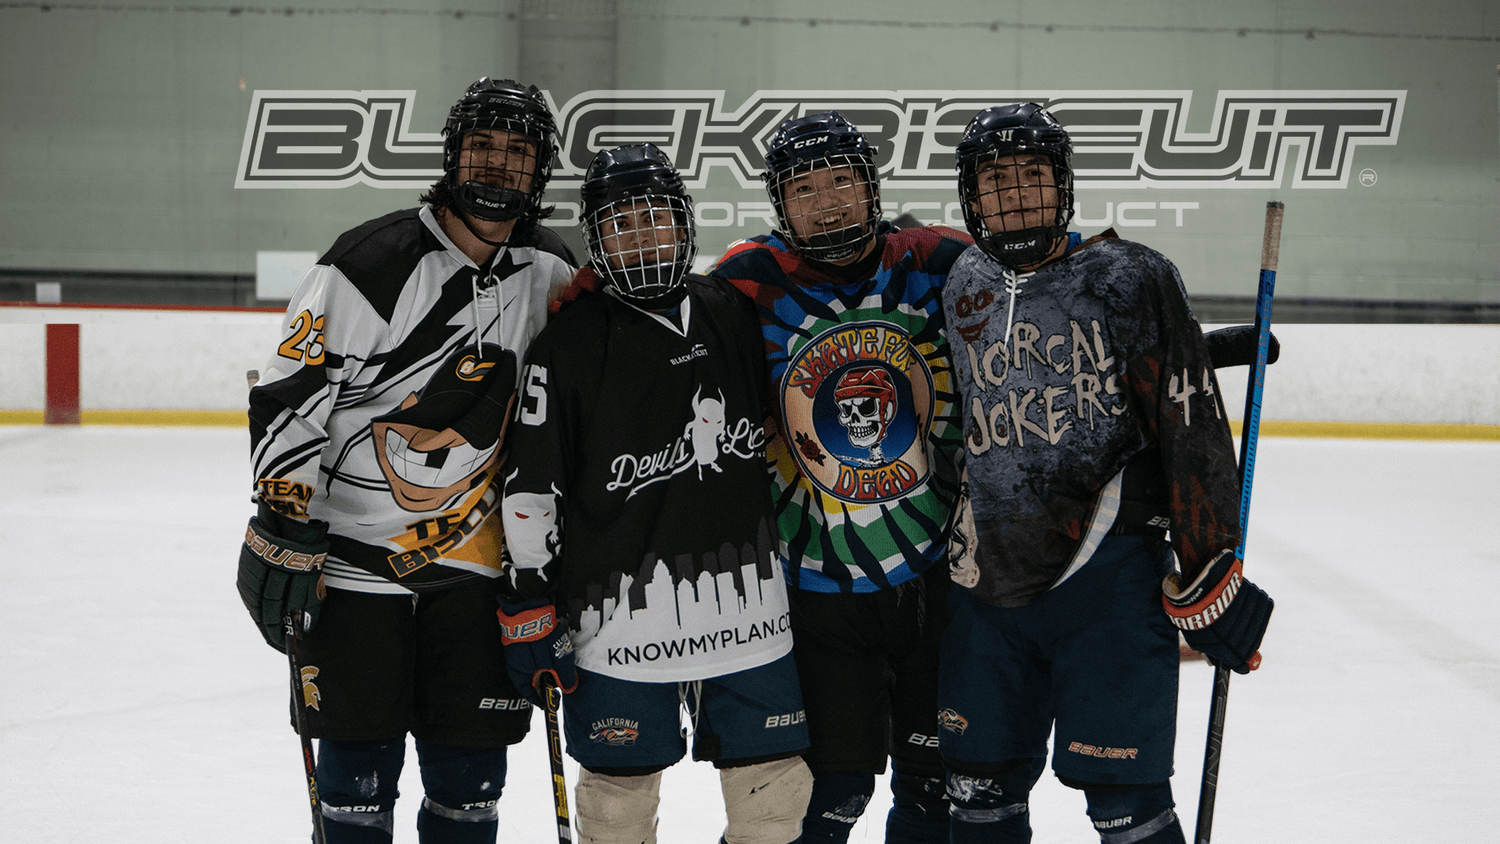 Personally love the black team canada jerseys : r/hockeyjerseys